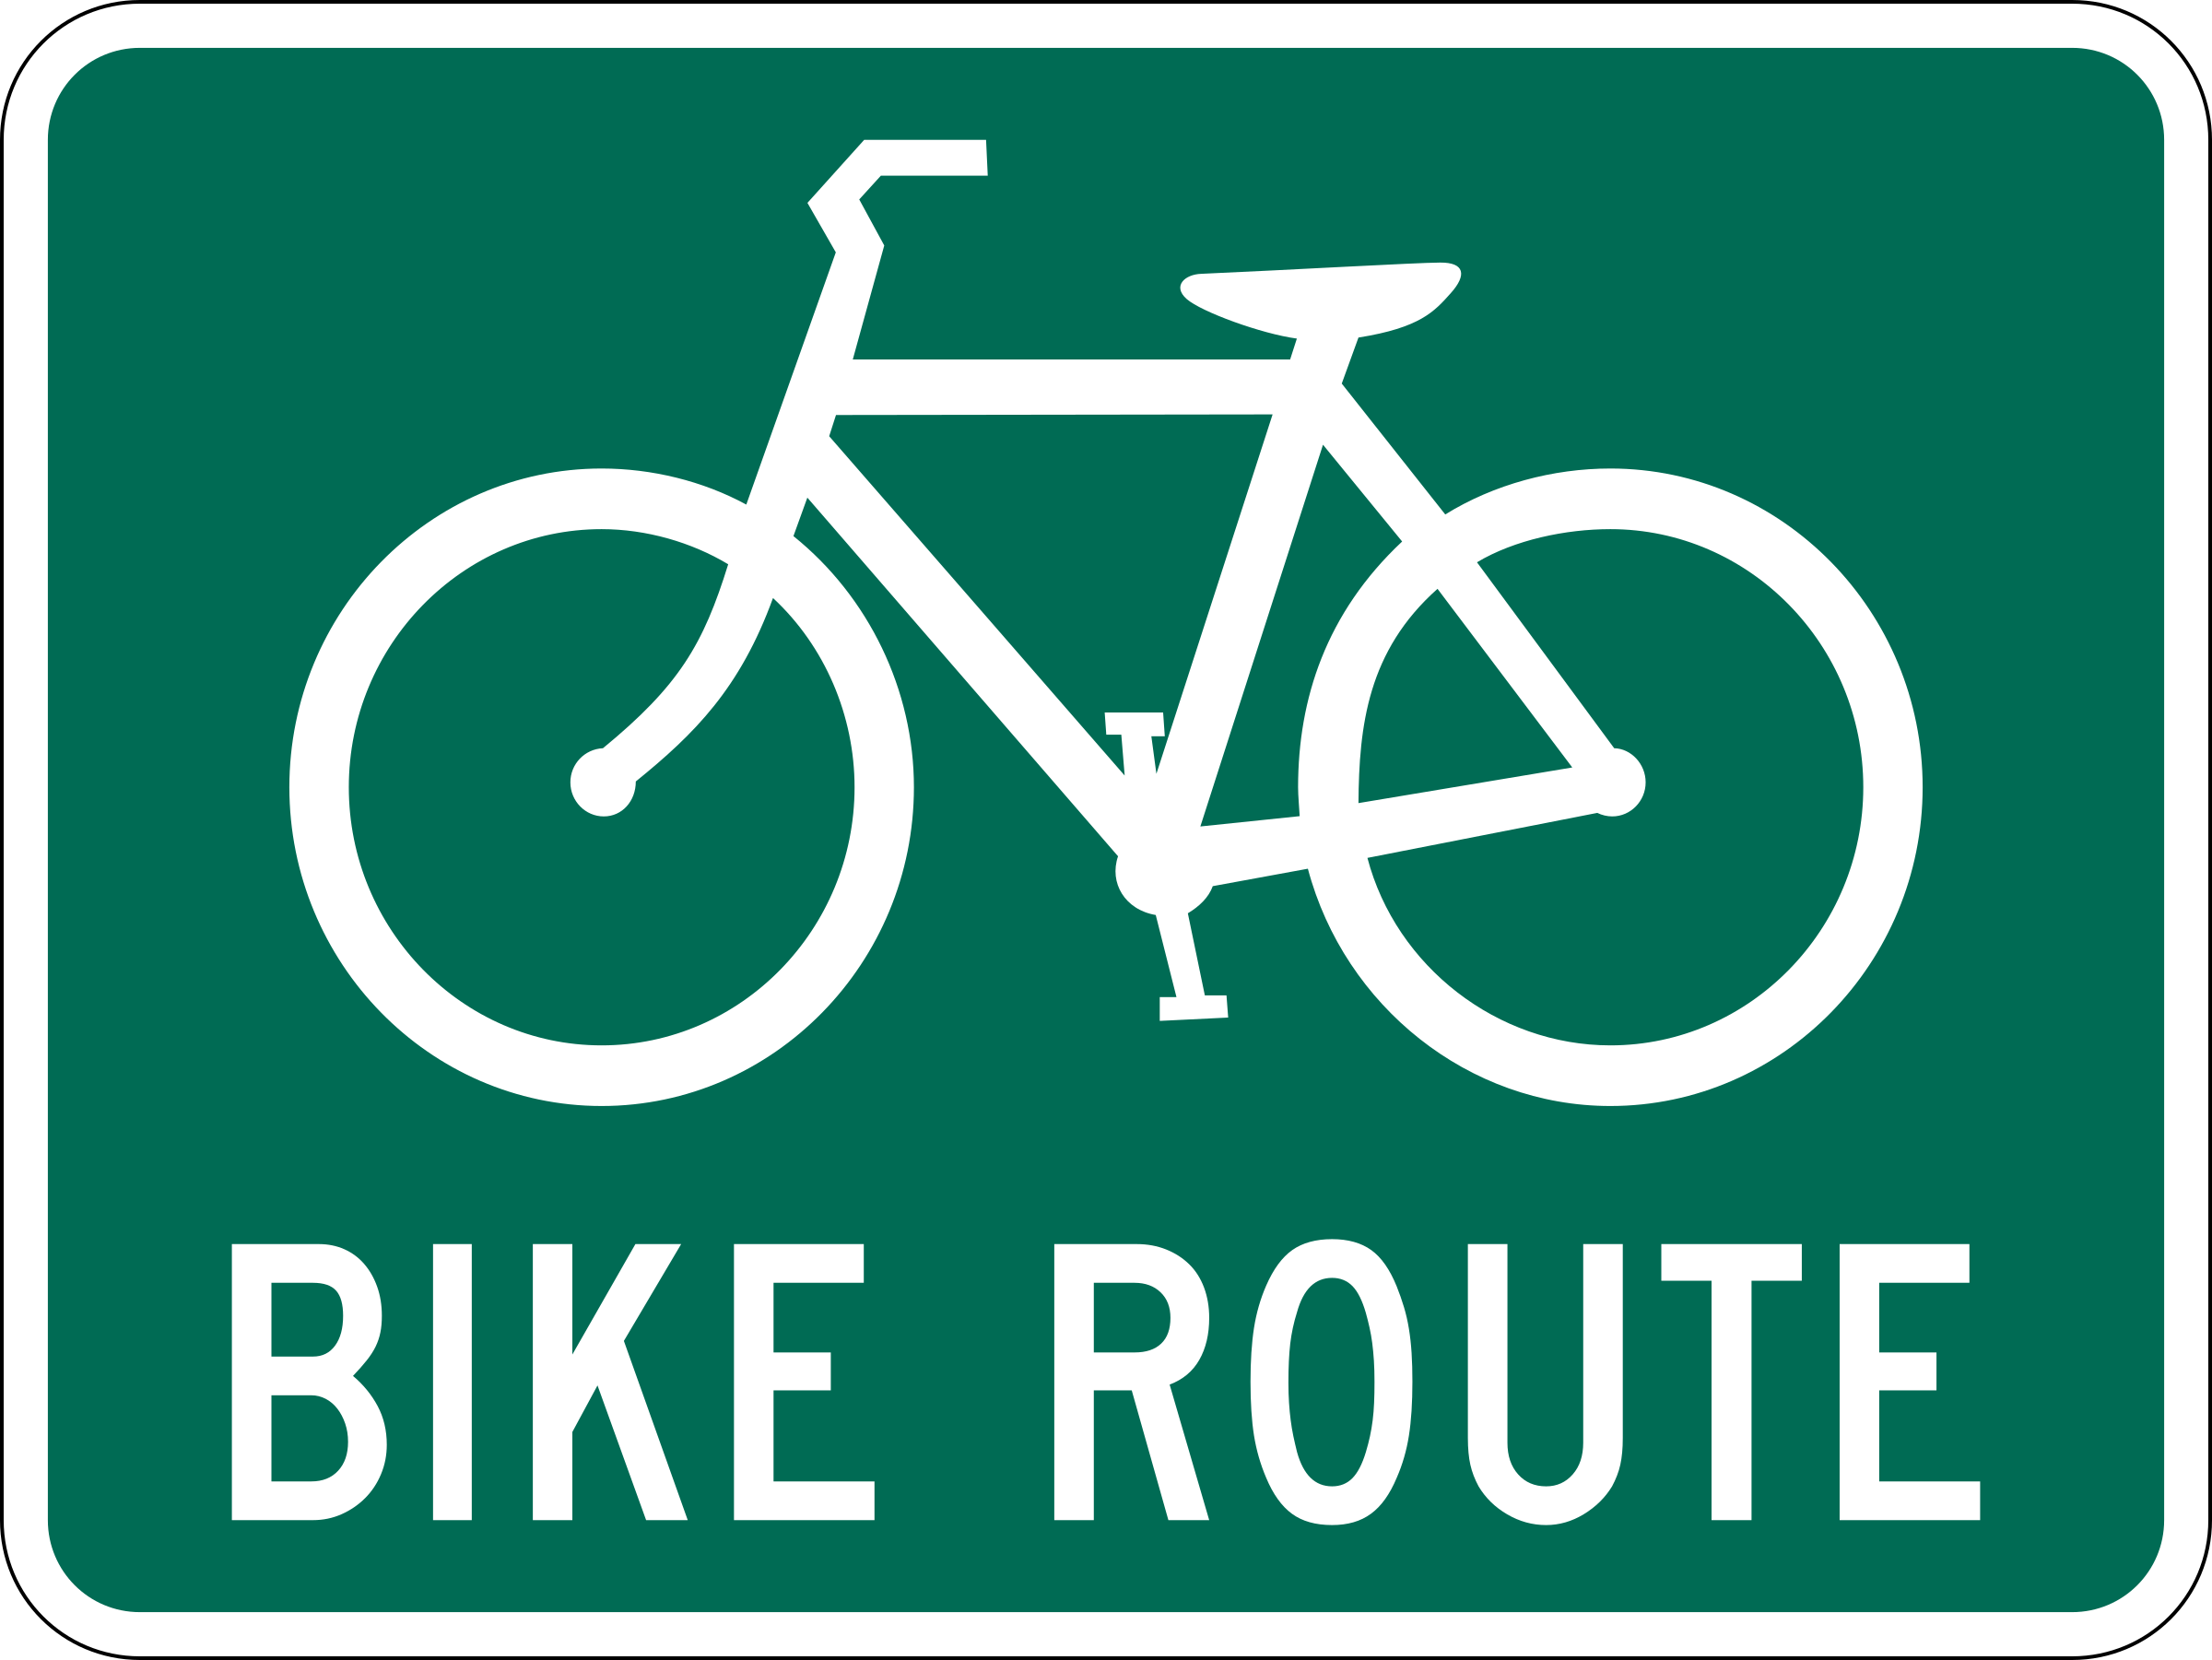 Bike route clipart